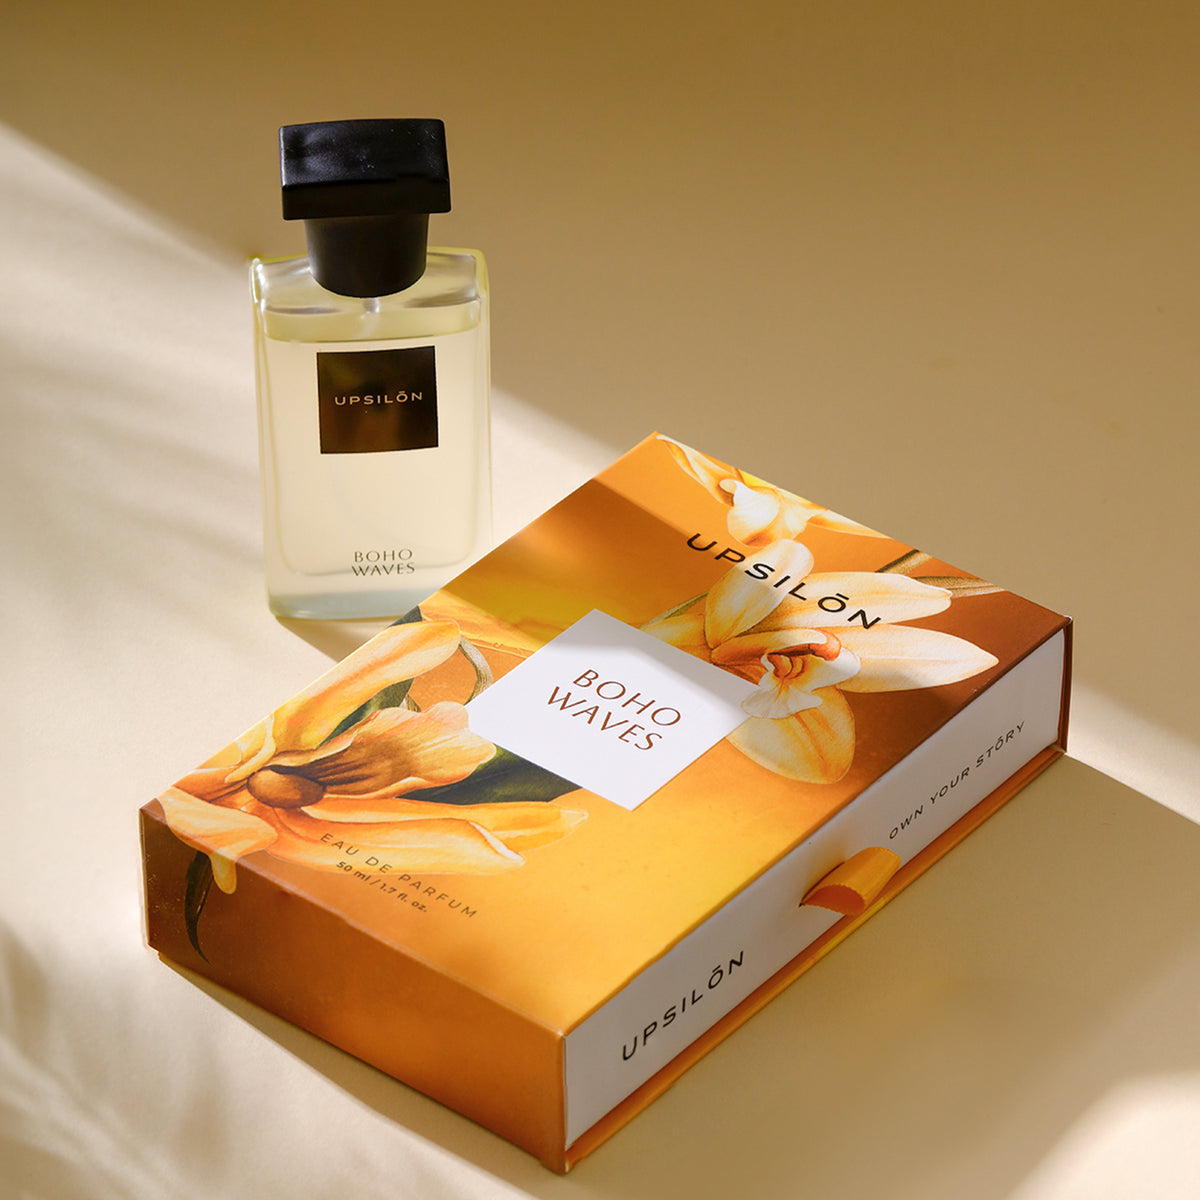 bottle of "Boho Waves" Eau de Parfum by UPSILON resting elegantly on a wooden table beside a box